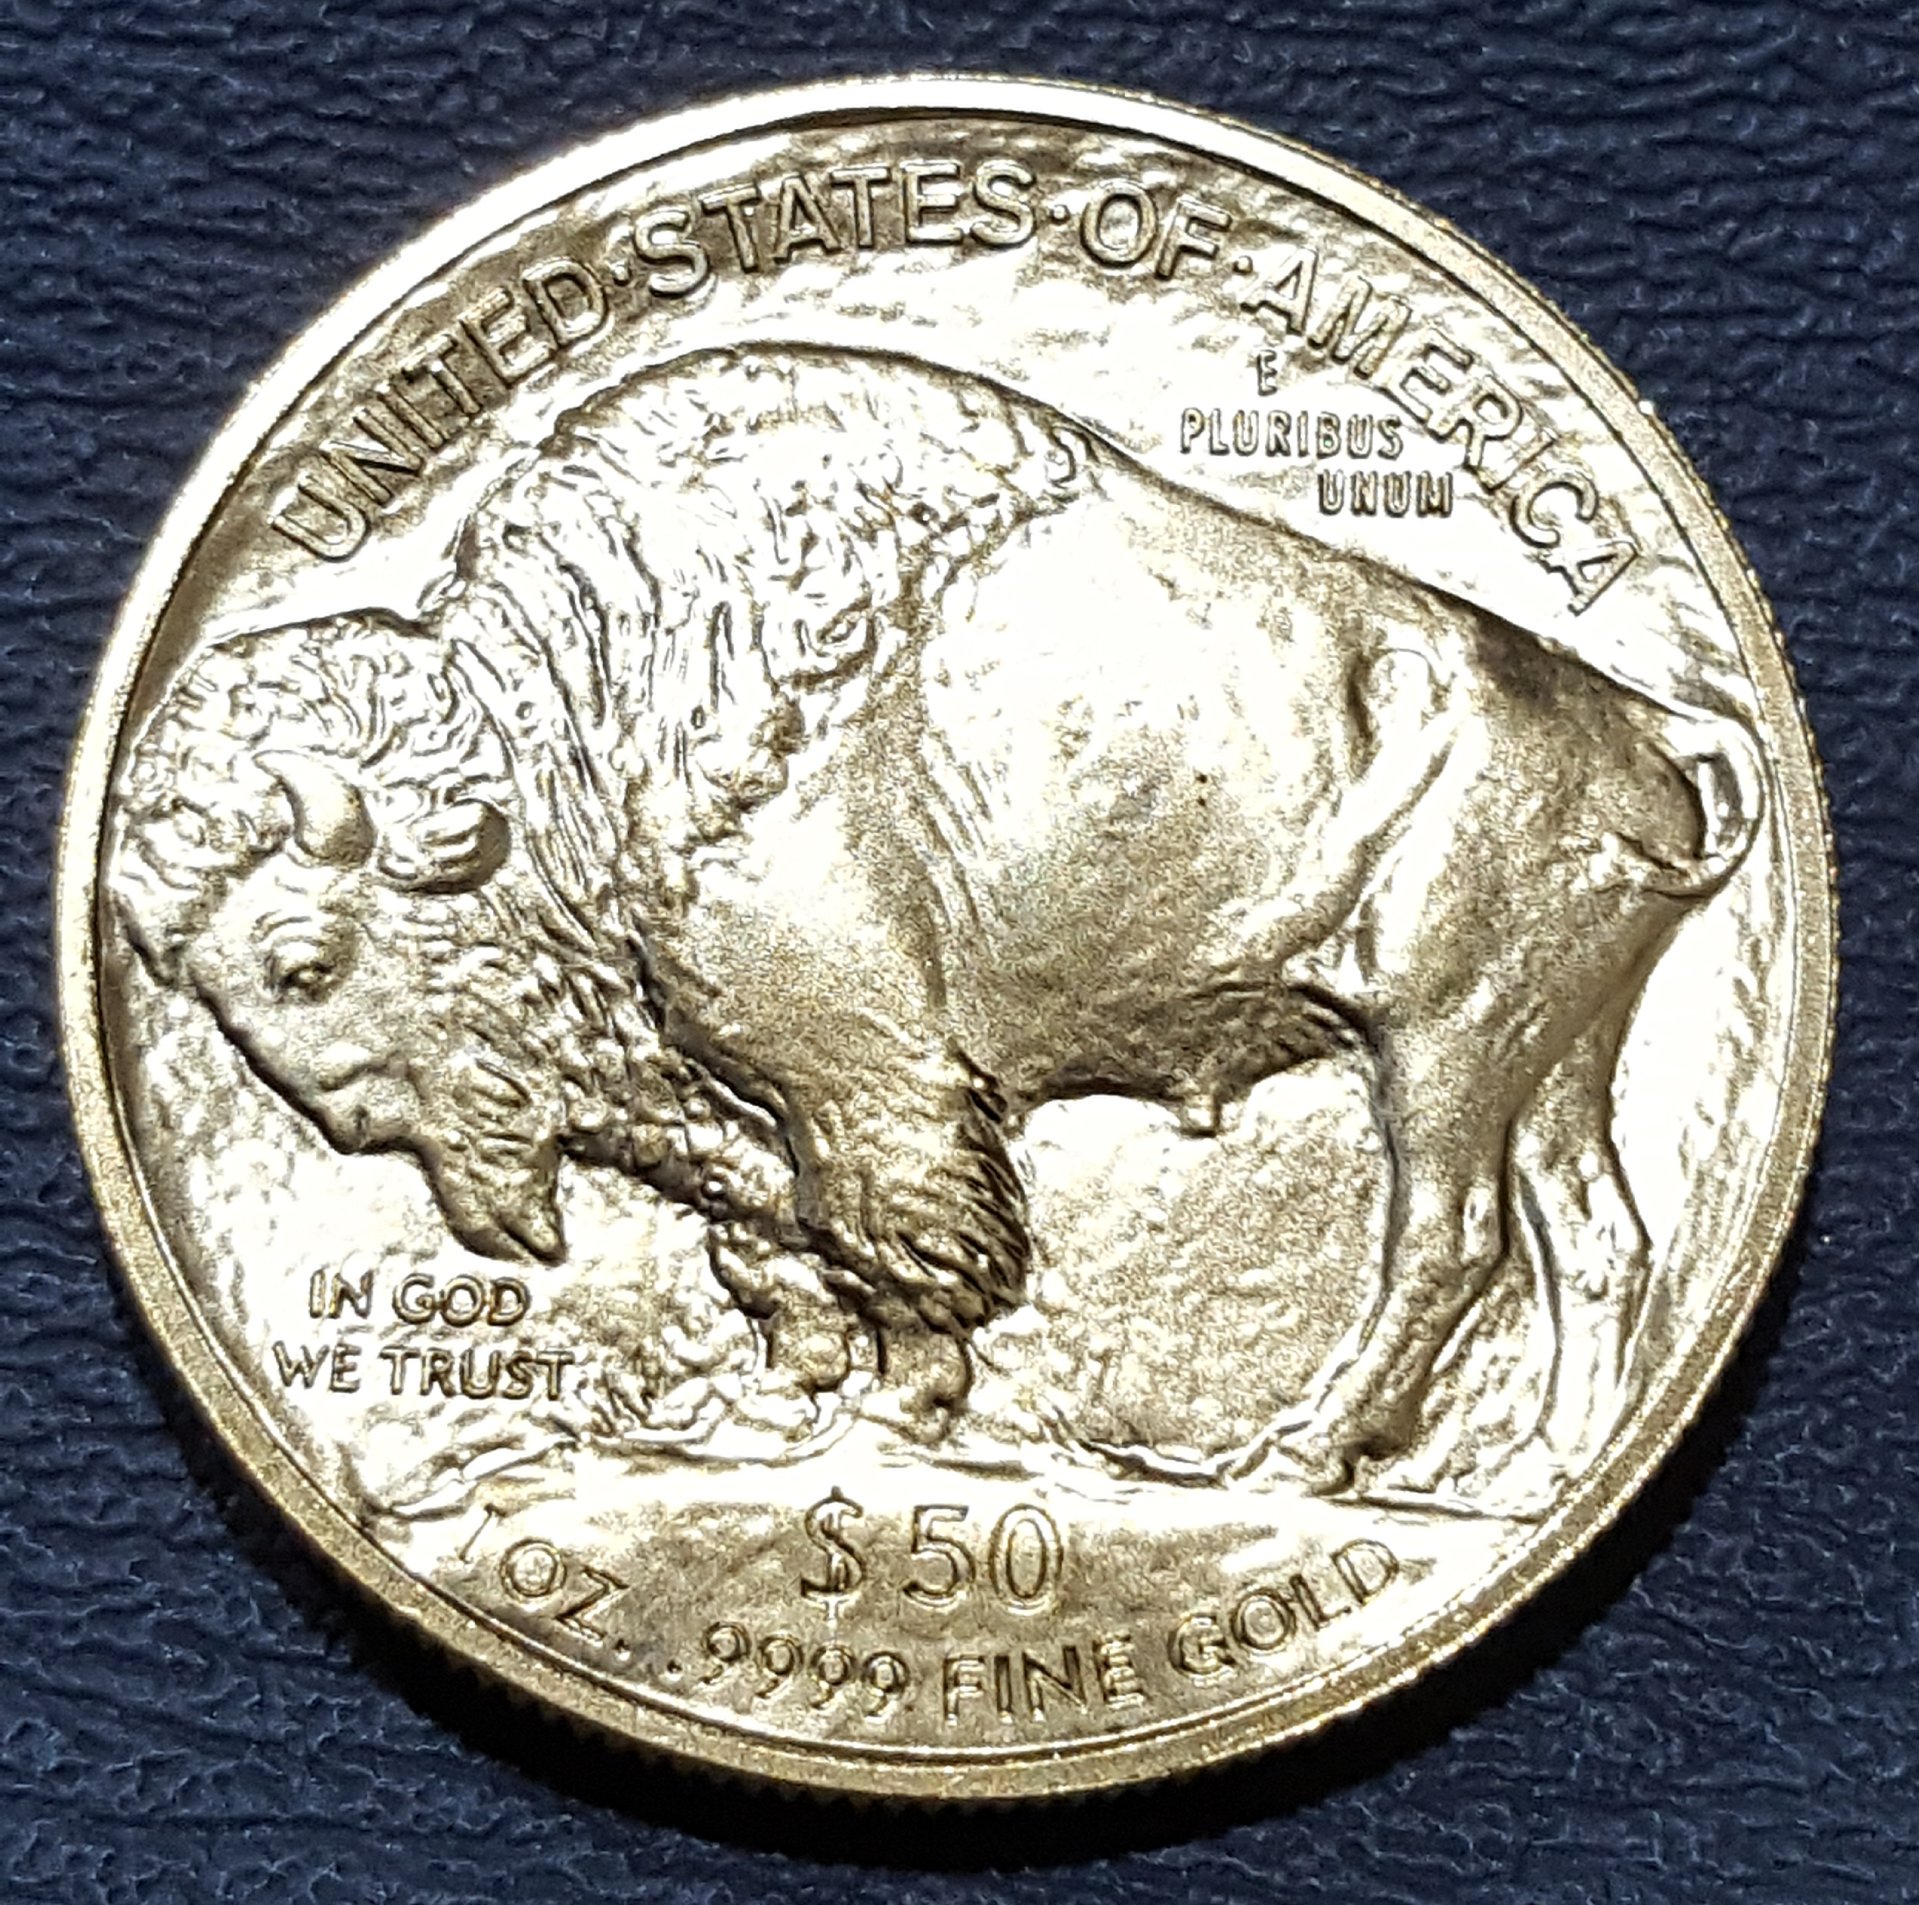 sold-1oz-gold-buffalo-sold-coin-talk